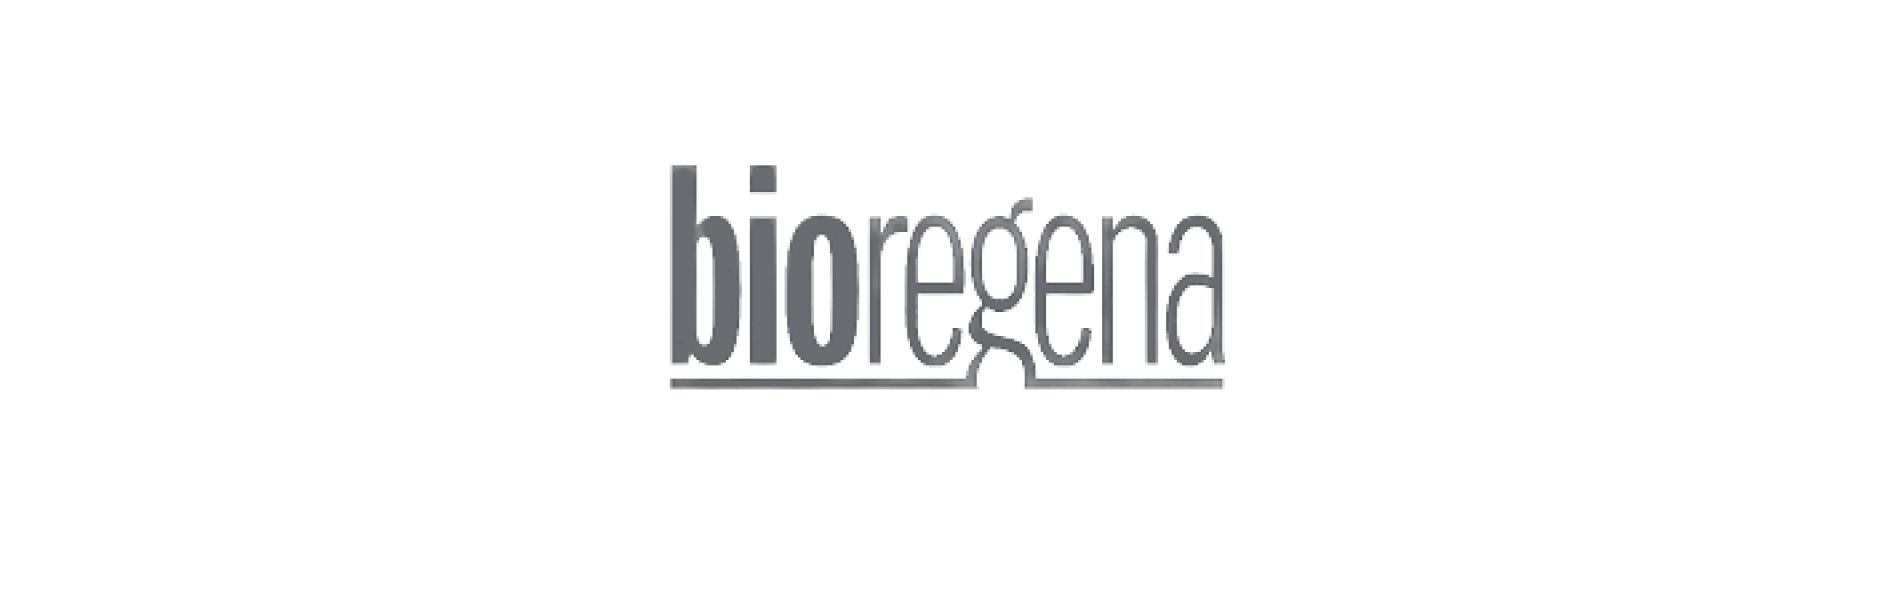 Bioregena